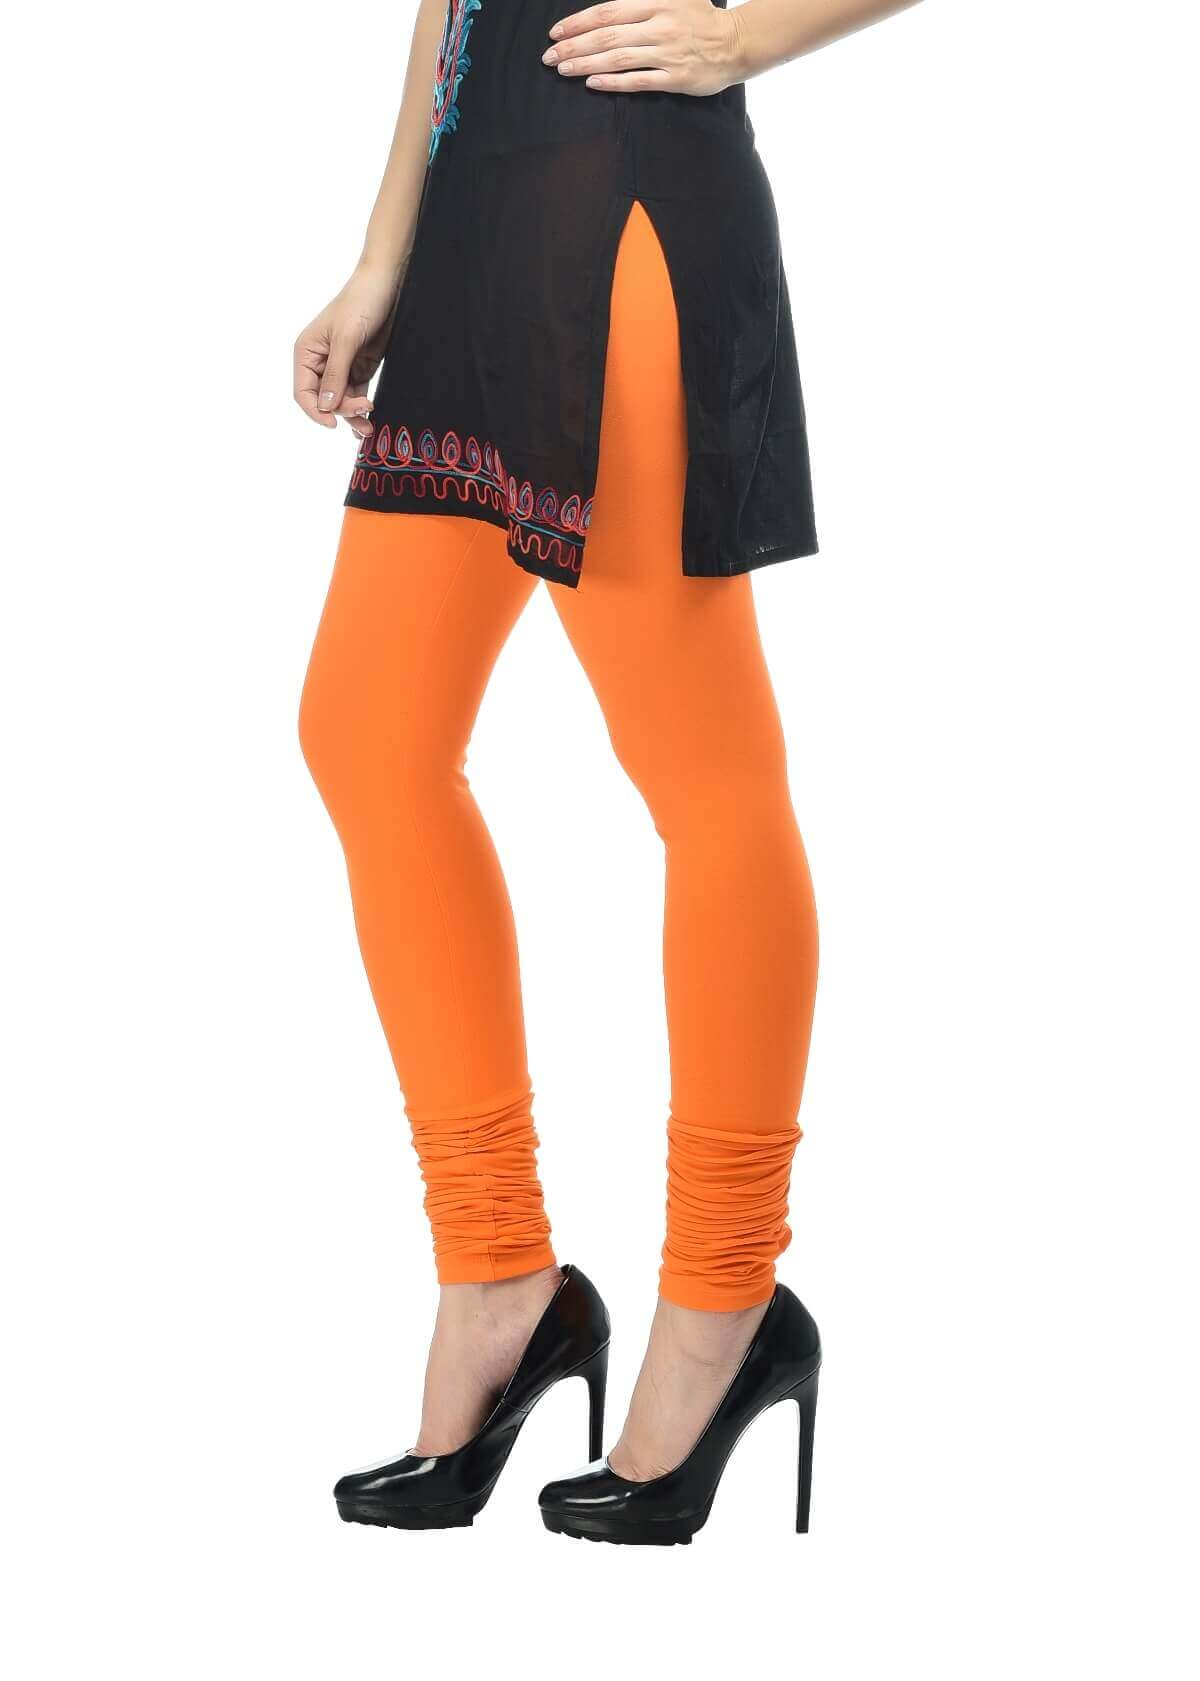 Buy Ahoy Brand Orange Colour Solid Legging- Jointlook.com/shop